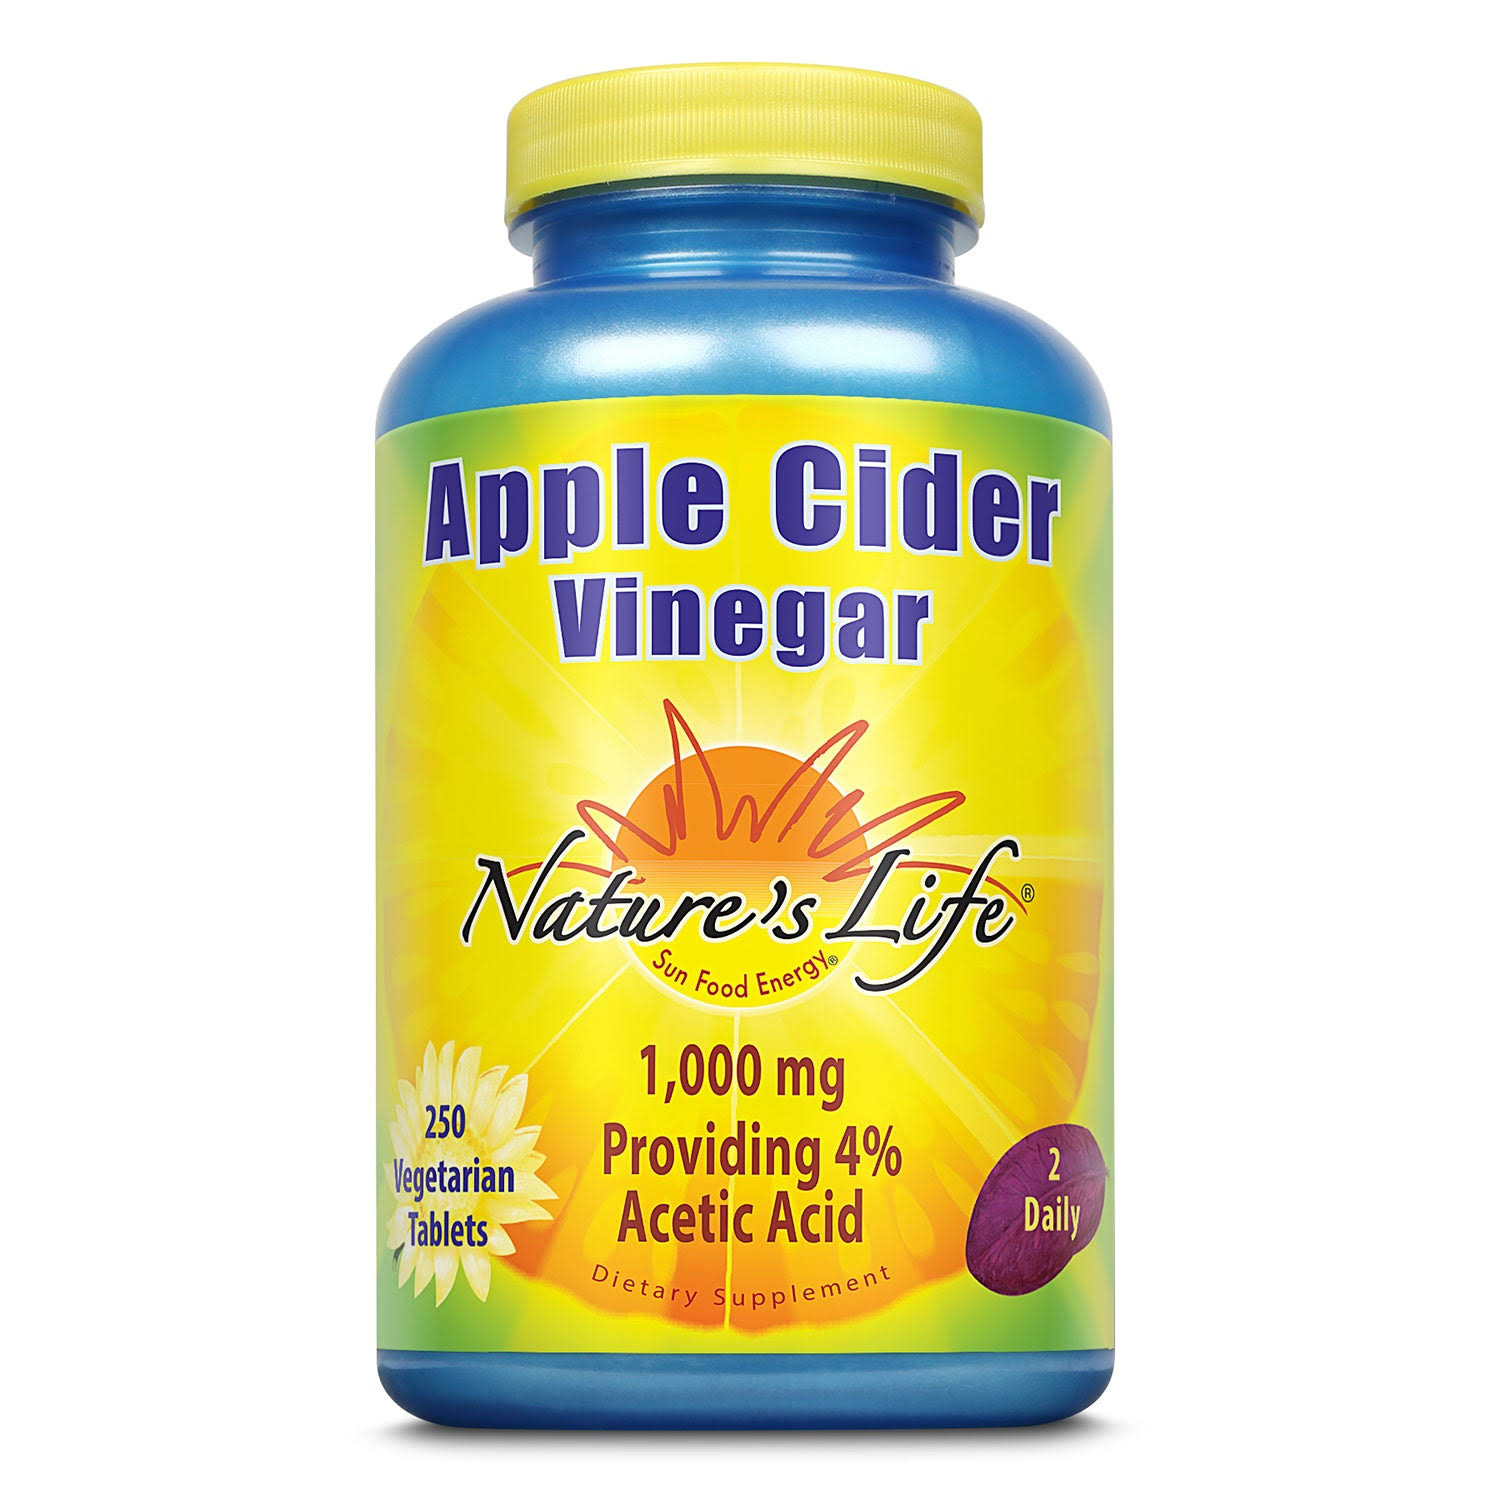 Nature's Life Apple Cider Vinegar - 250ct